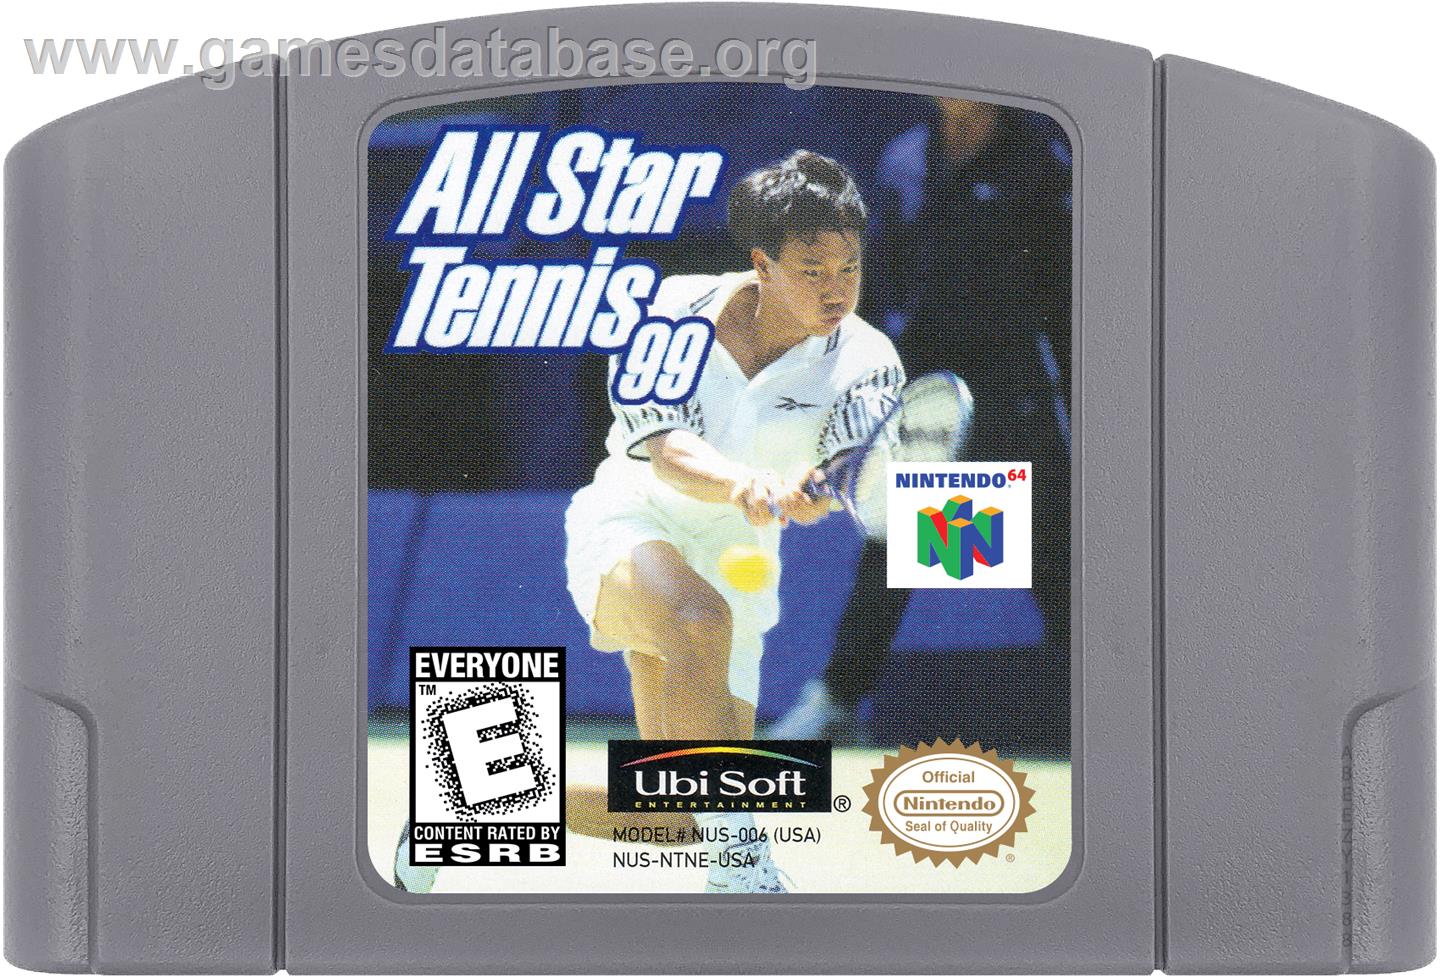 All Star Tennis '99 - Nintendo N64 - Artwork - Cartridge